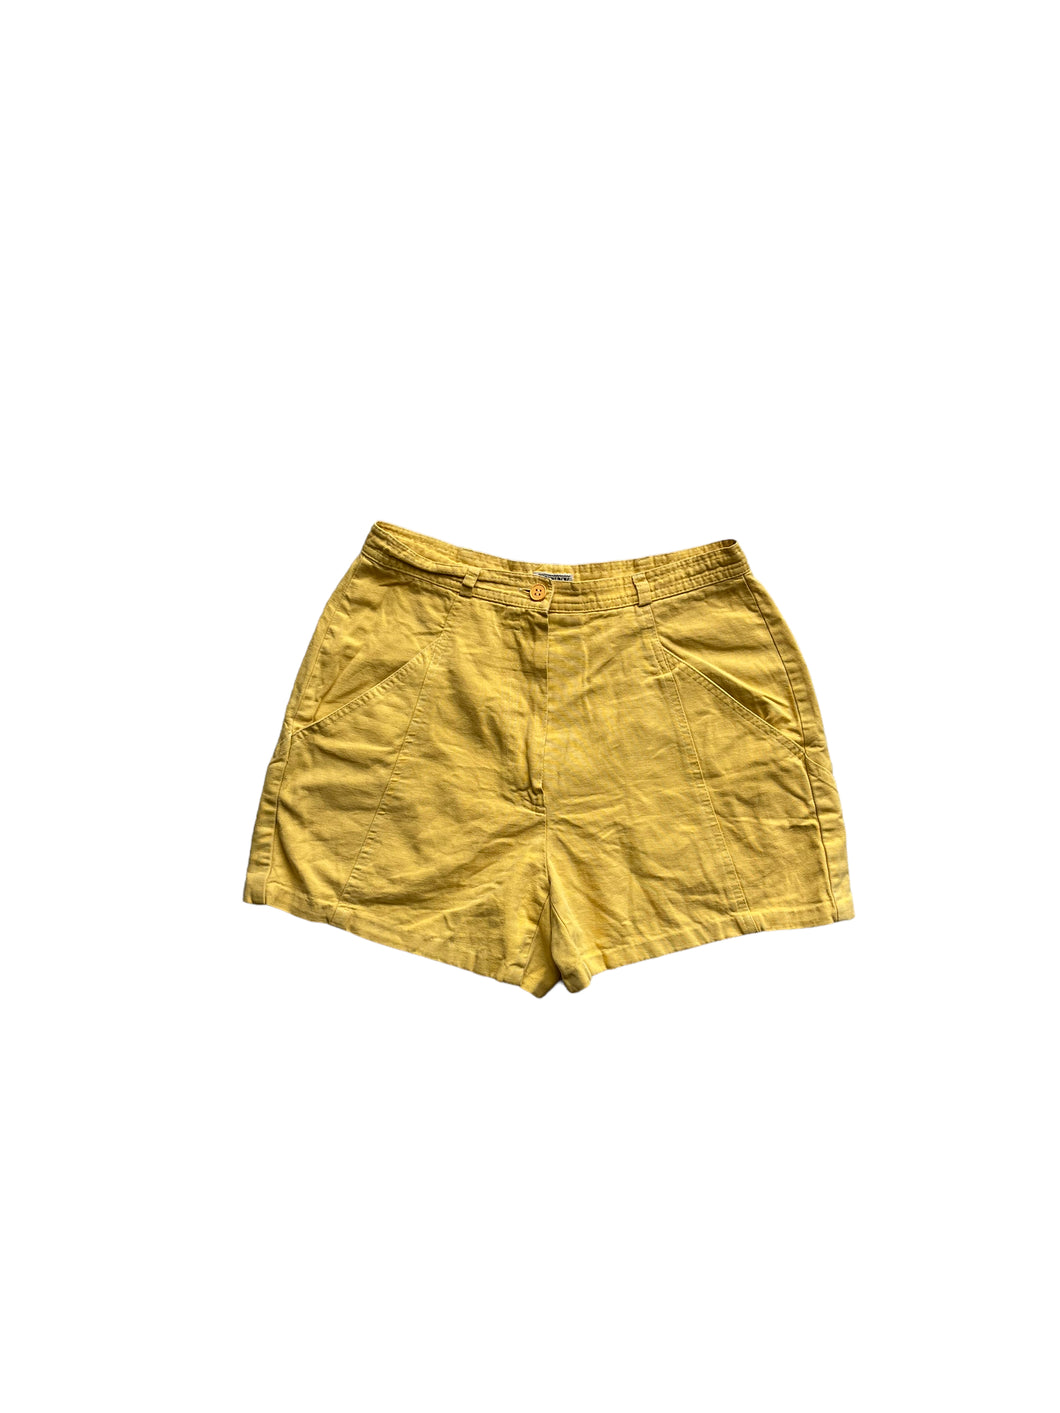 Retro beach mini shorts